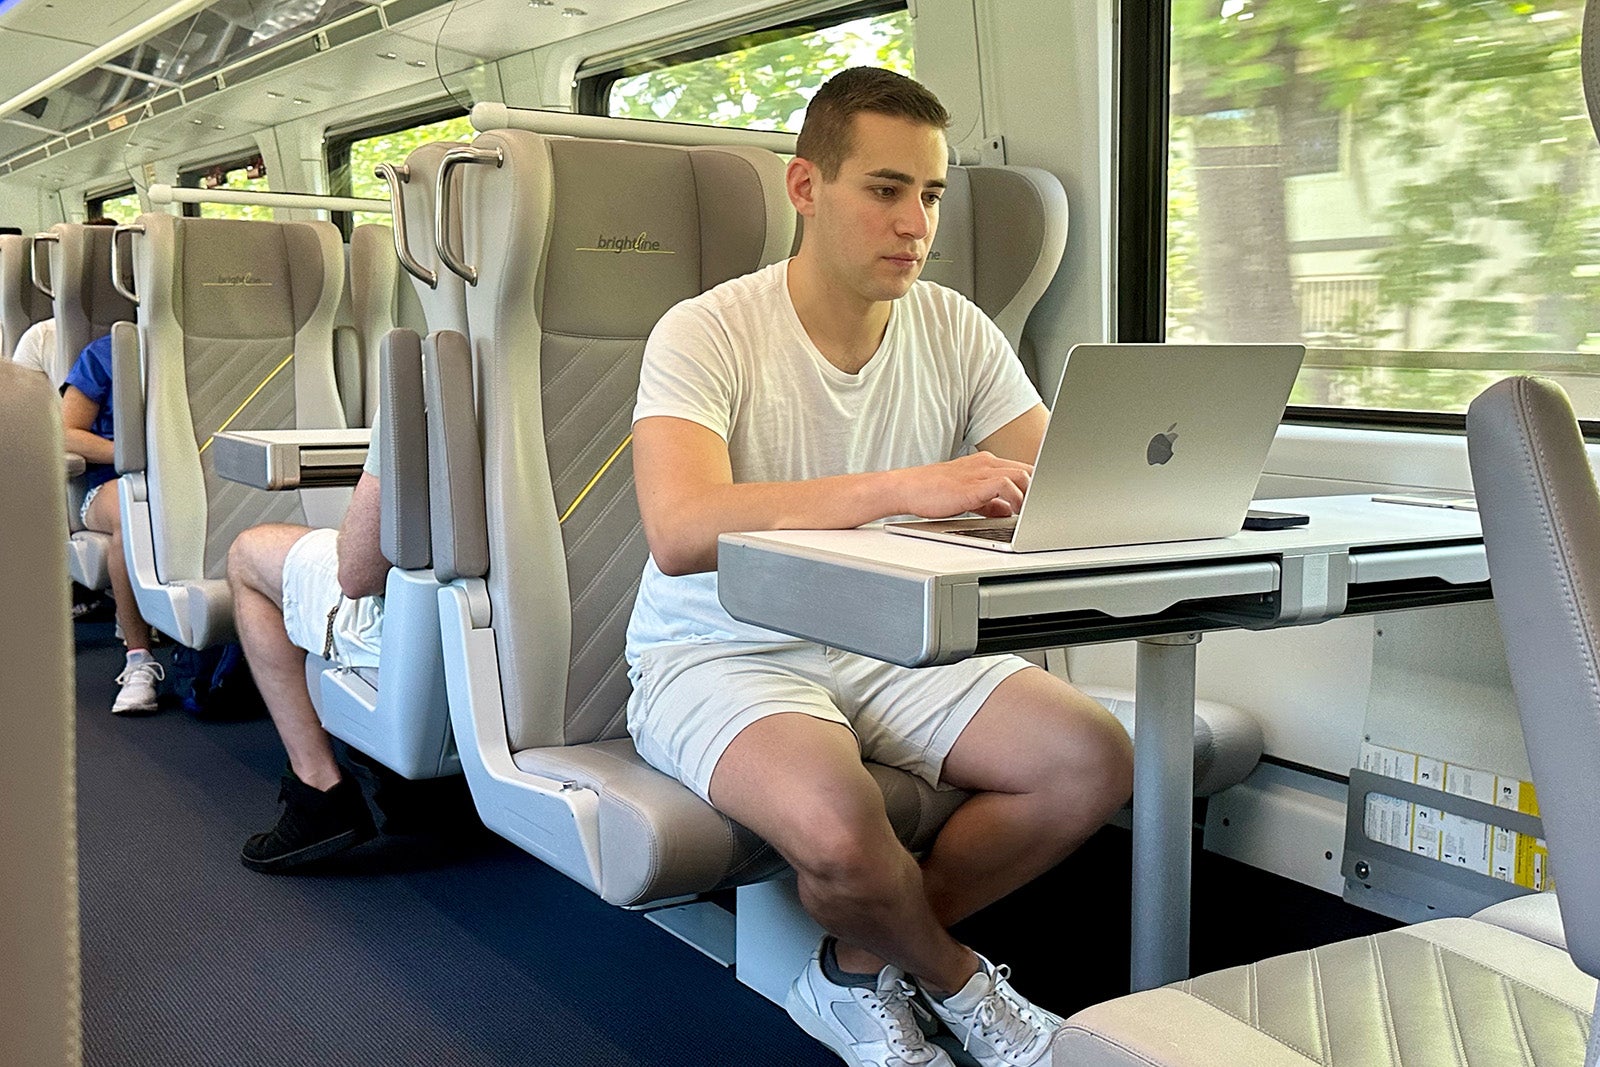 zach using laptop on train